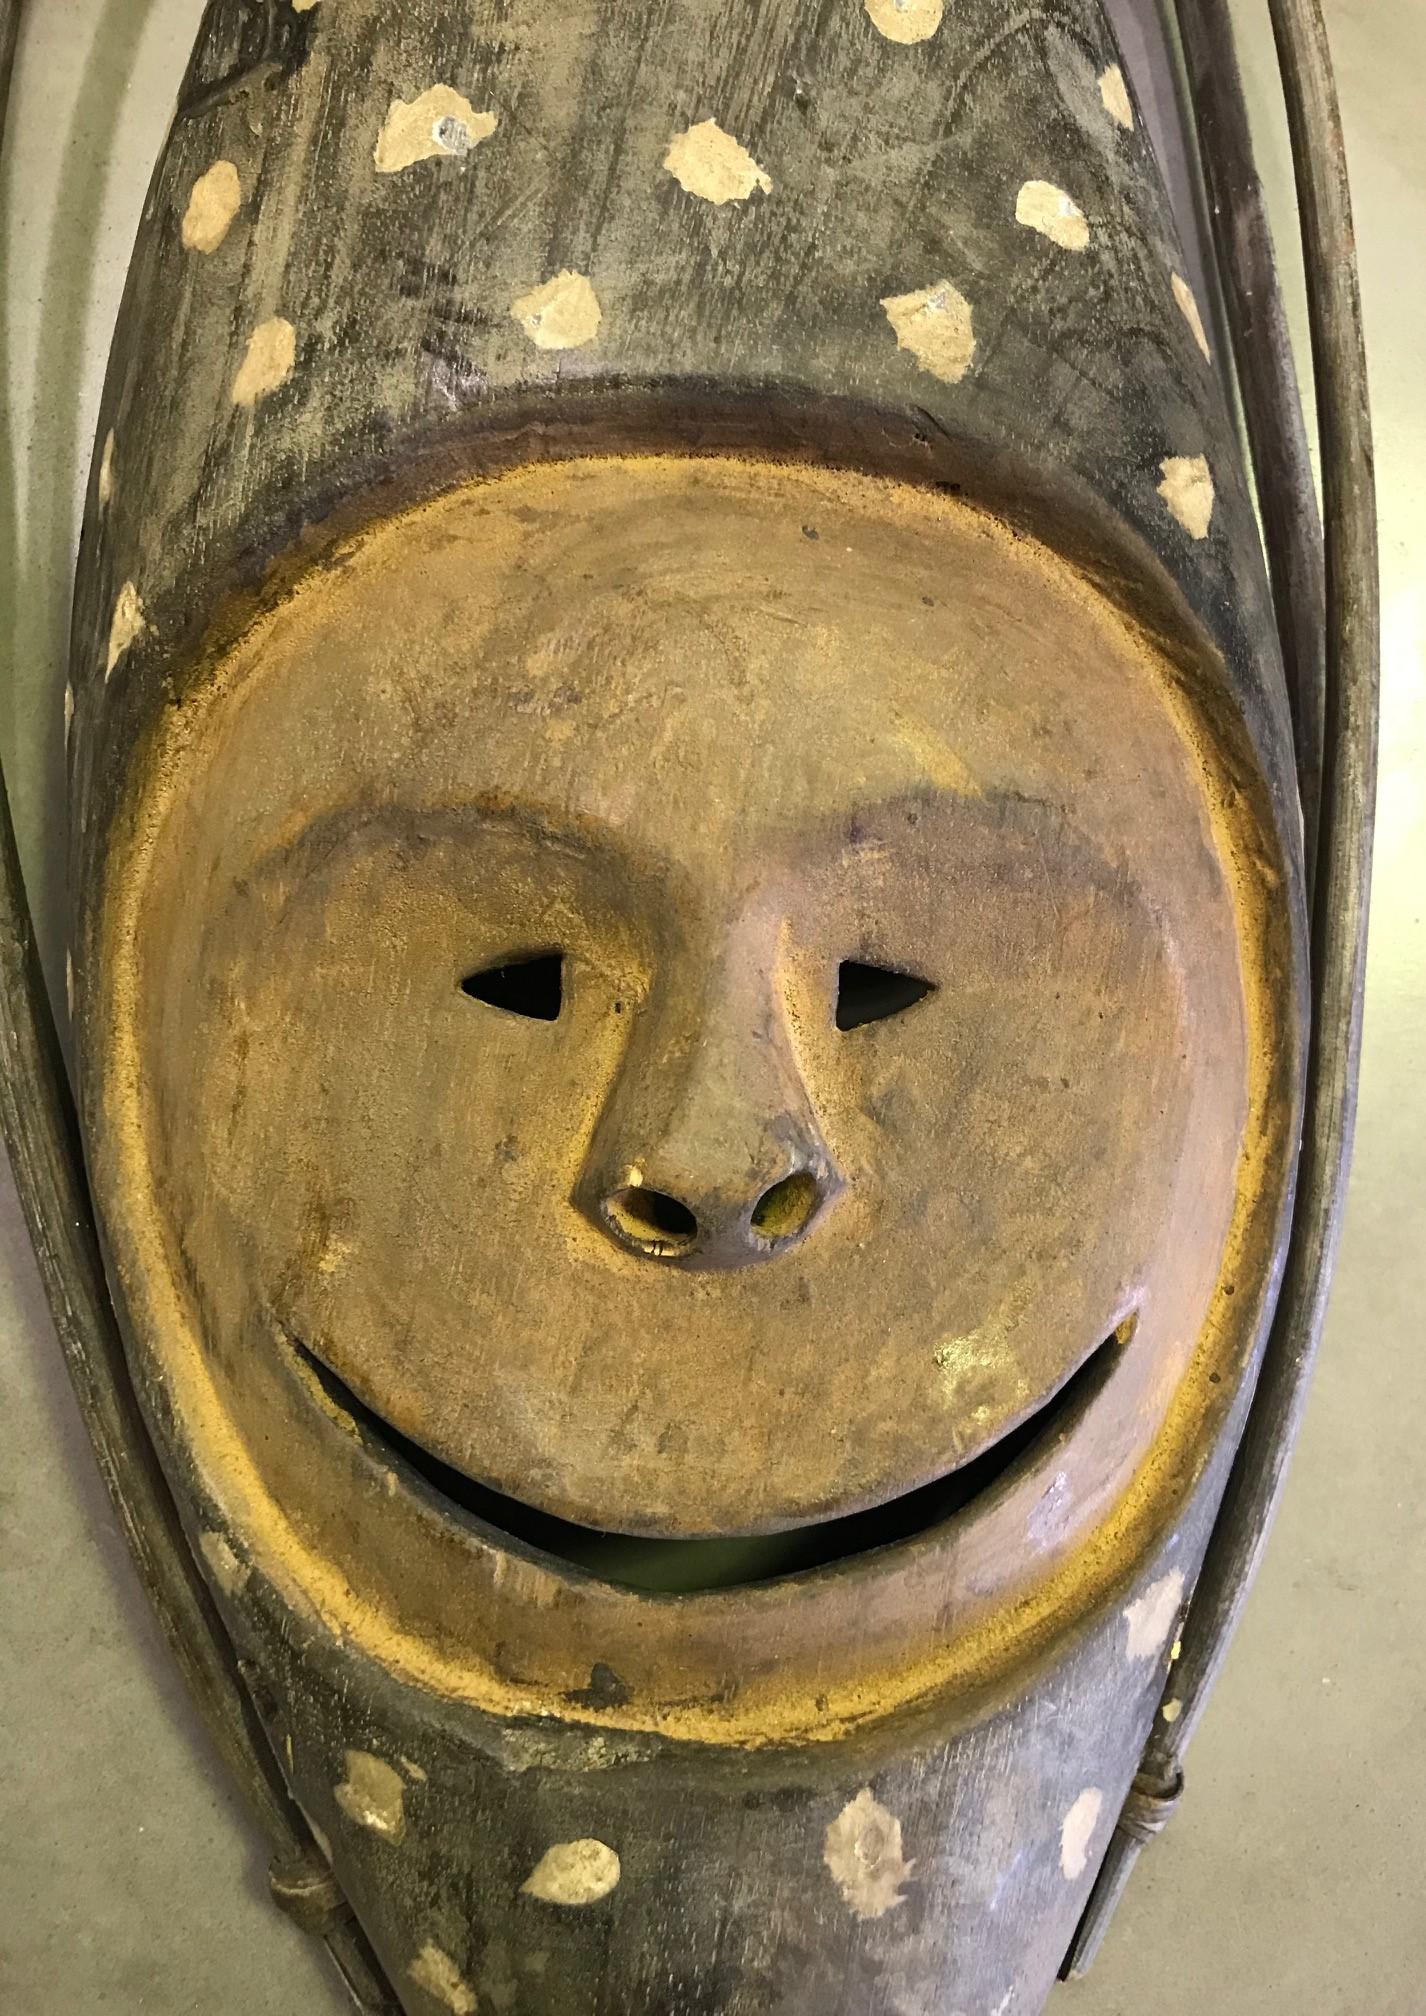 Hand-Carved Yupik Yup'ik Native American Alaska Carved Polychrome Wood Anthropomorphic Mask For Sale